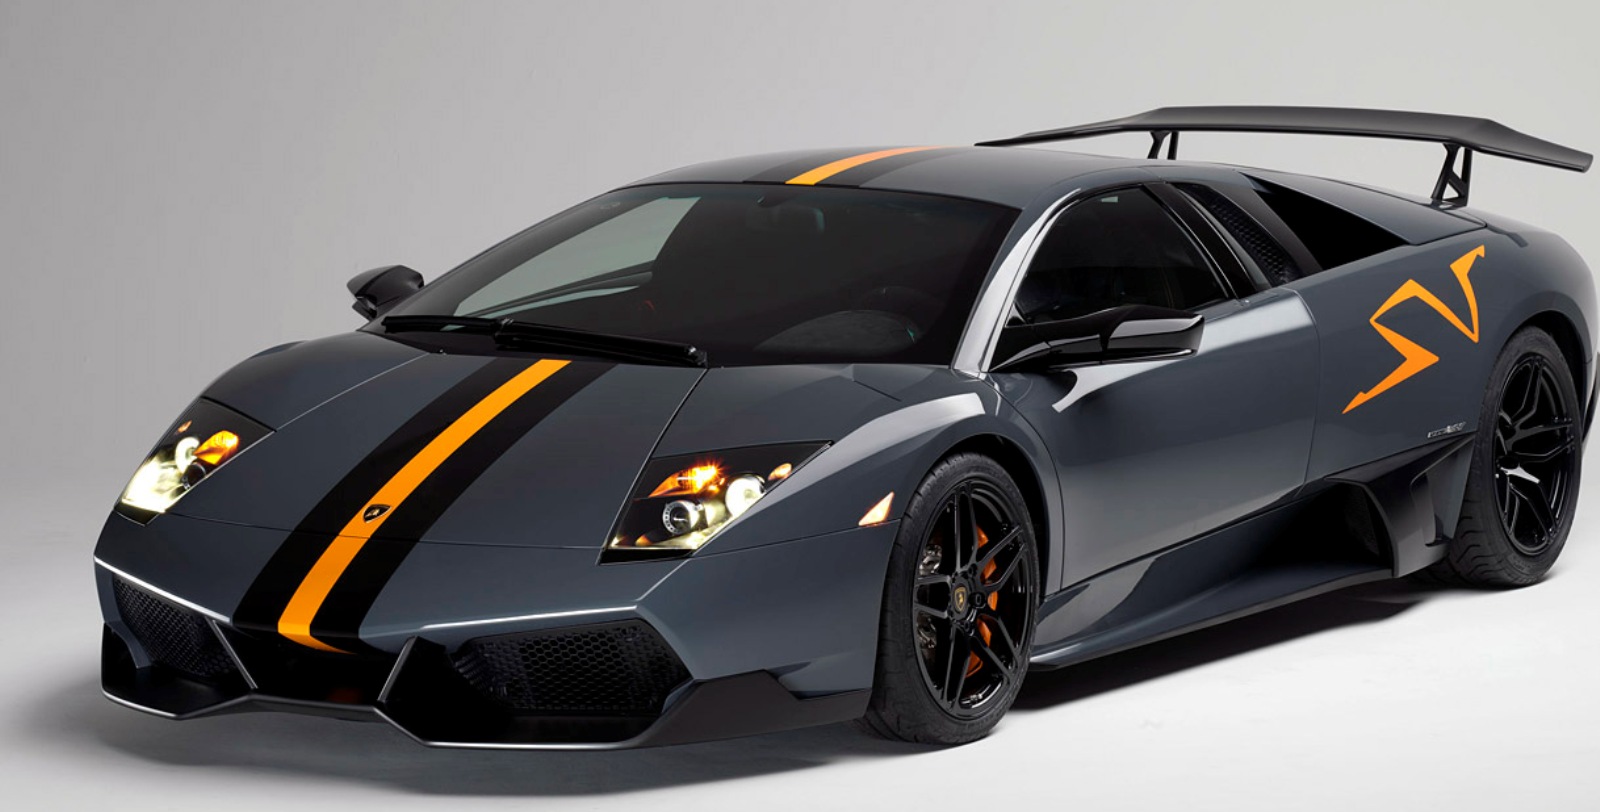 The New Lamborghini Sports Cars Models Wallpaper Pictures